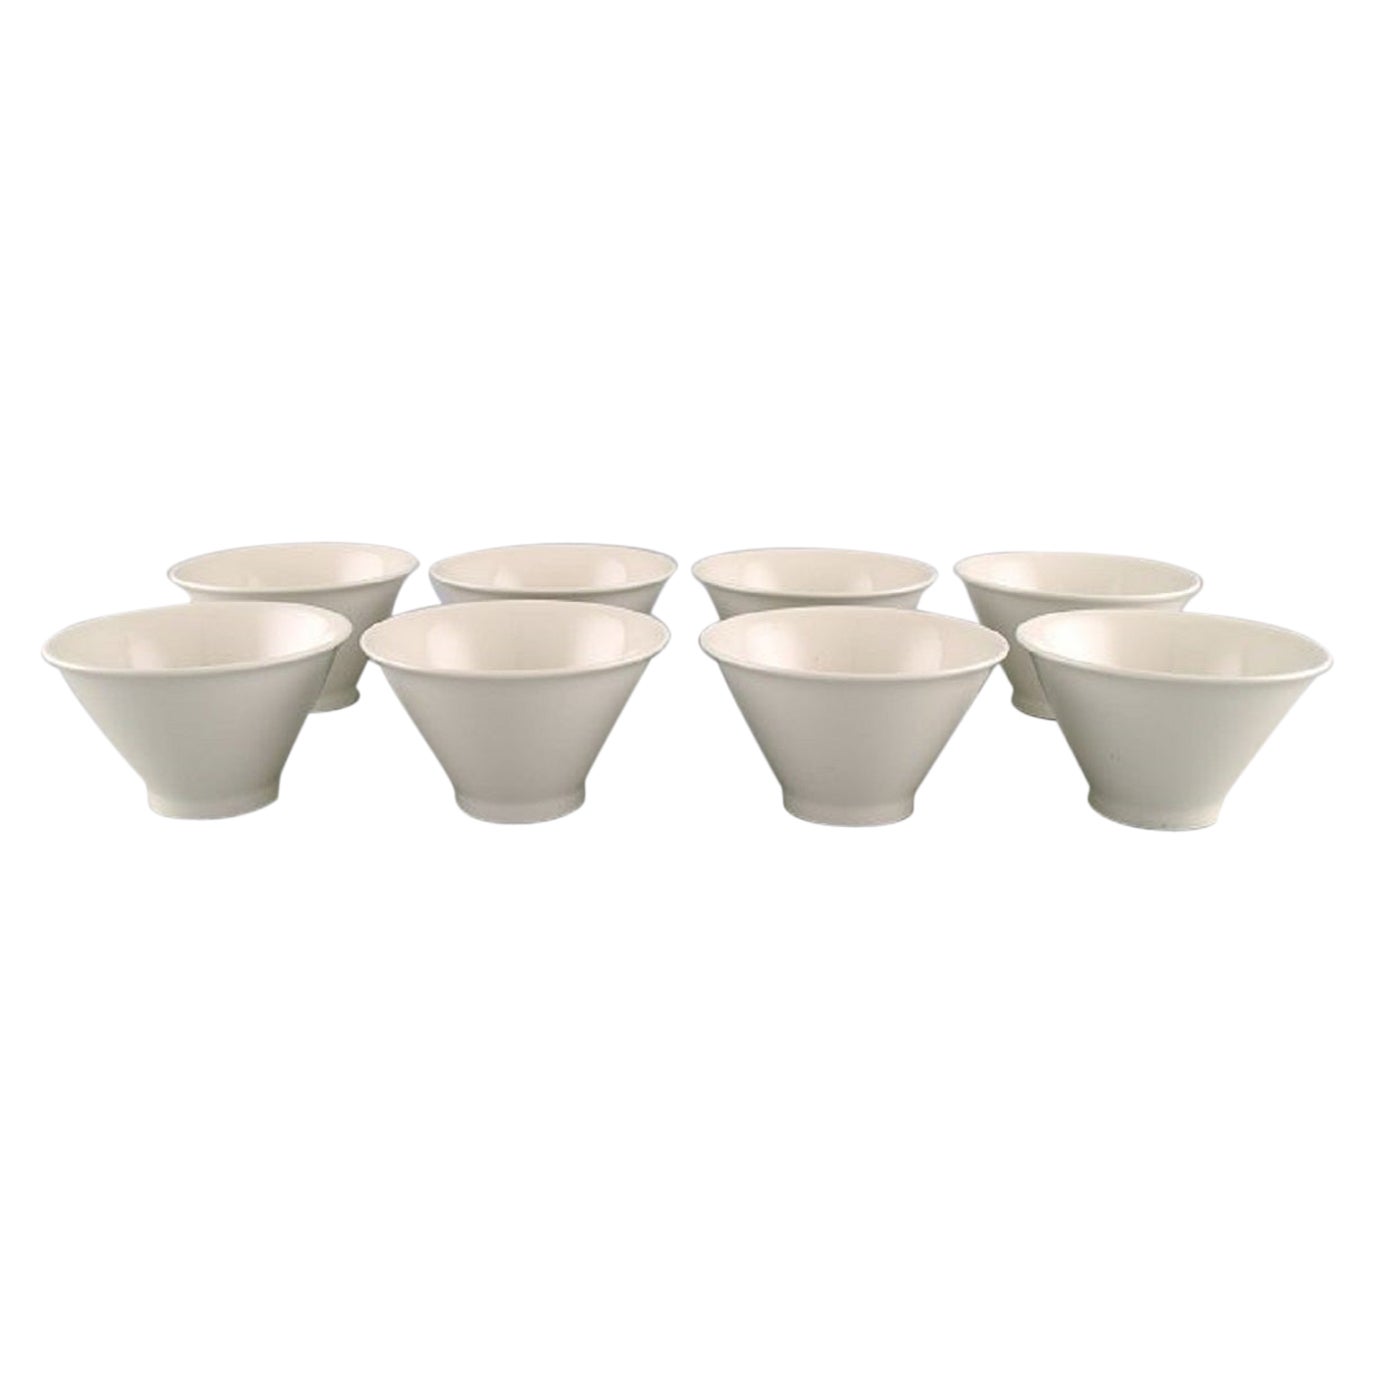 Inkeri Leivo '1944-2010' for Arabia, Eight Harlequin Bowls in Porcelain